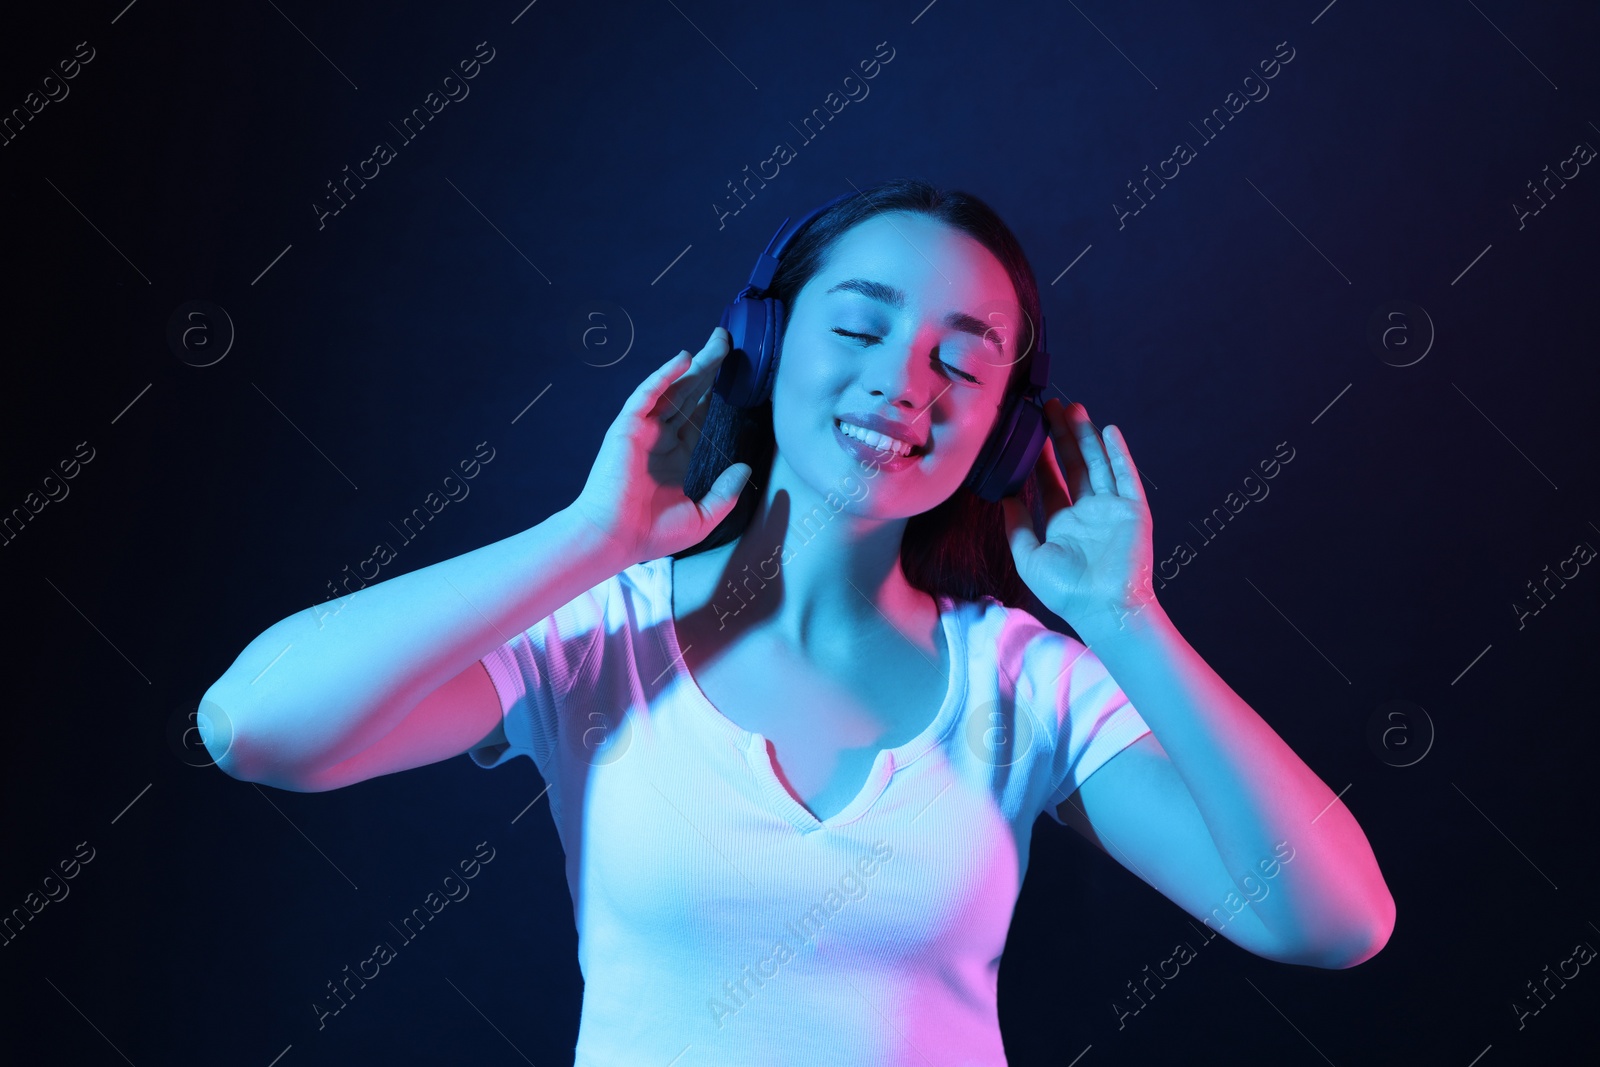 Photo of Happy woman in headphones enjoying music in neon lights against dark blue background